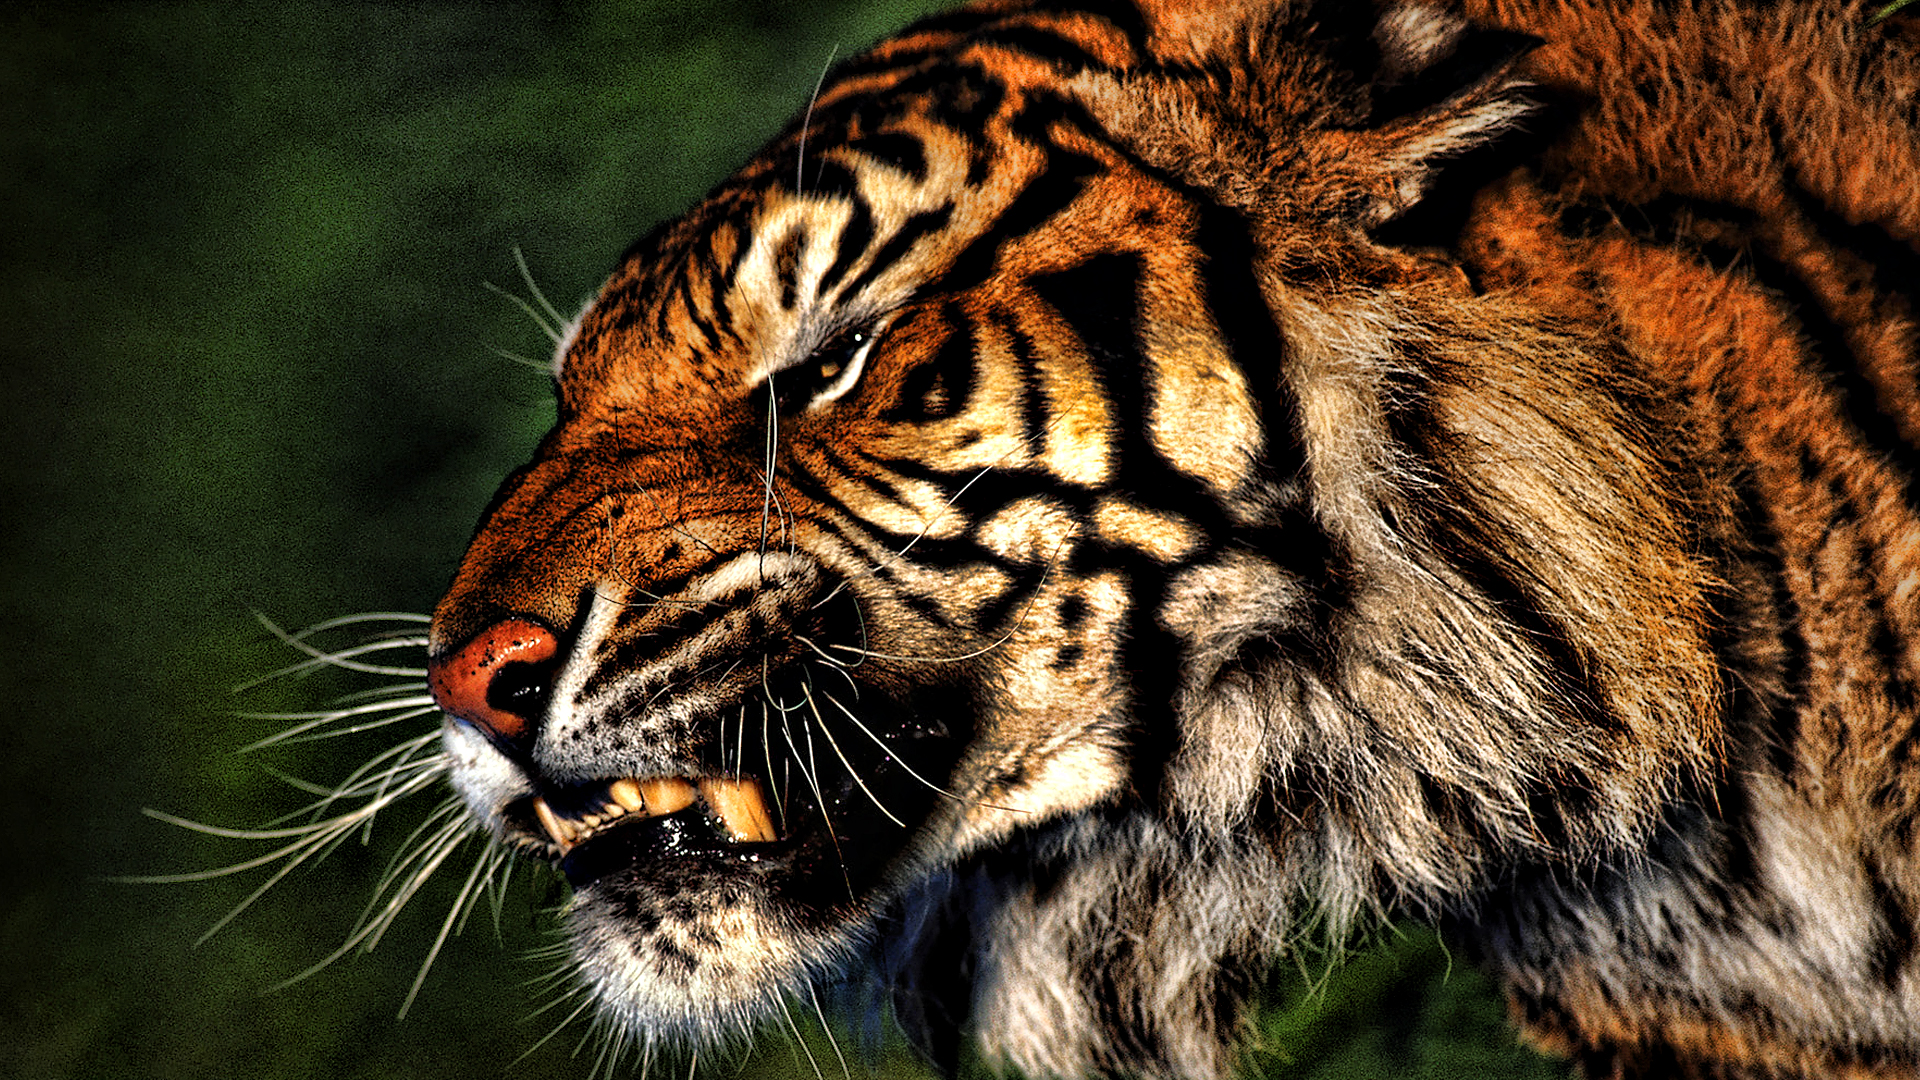 Tiger hd wallpaper for desktop